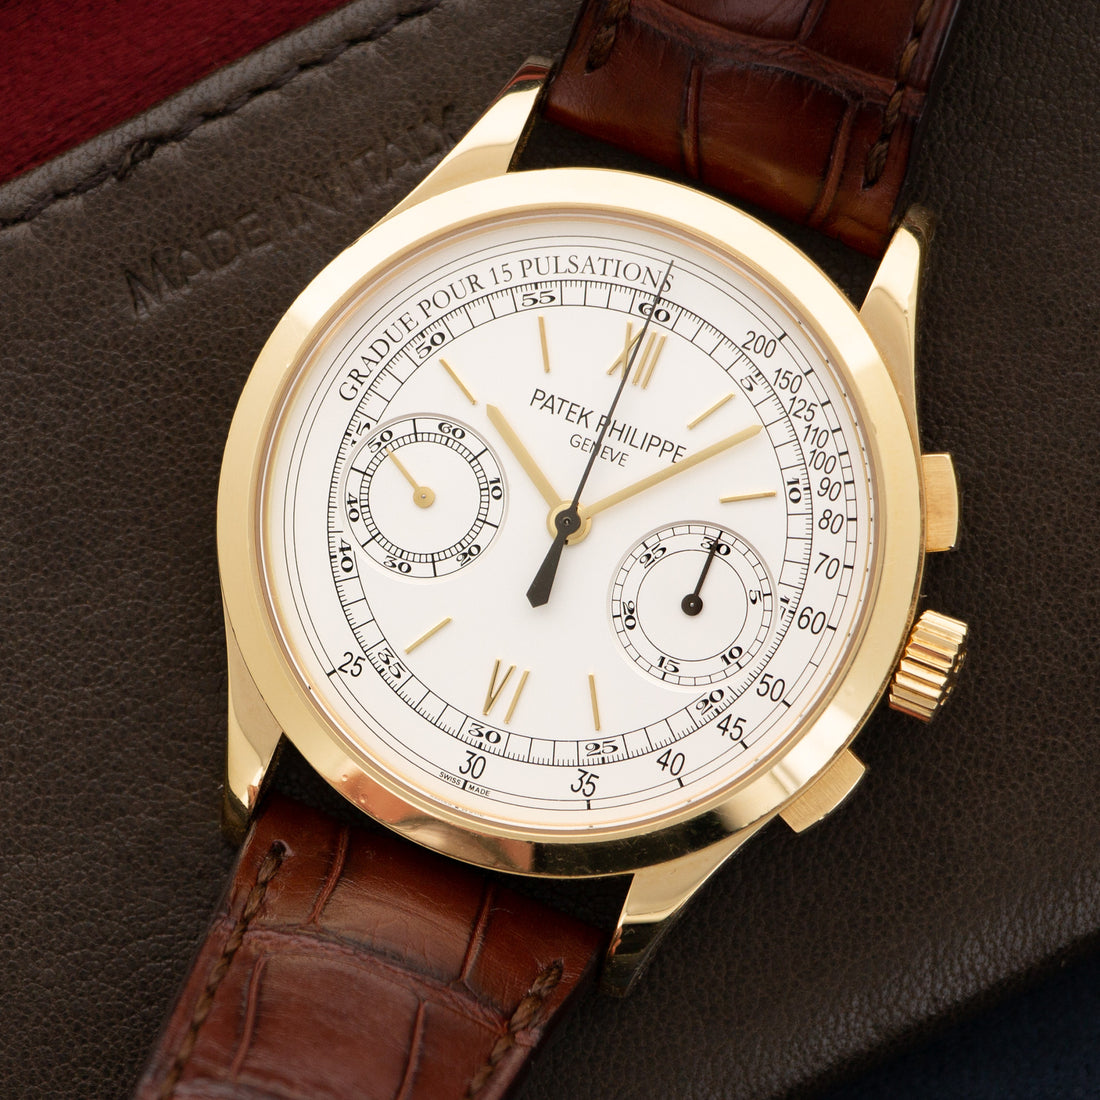 Patek Philippe Yellow Gold Chronograph Watch, Ref. 5170